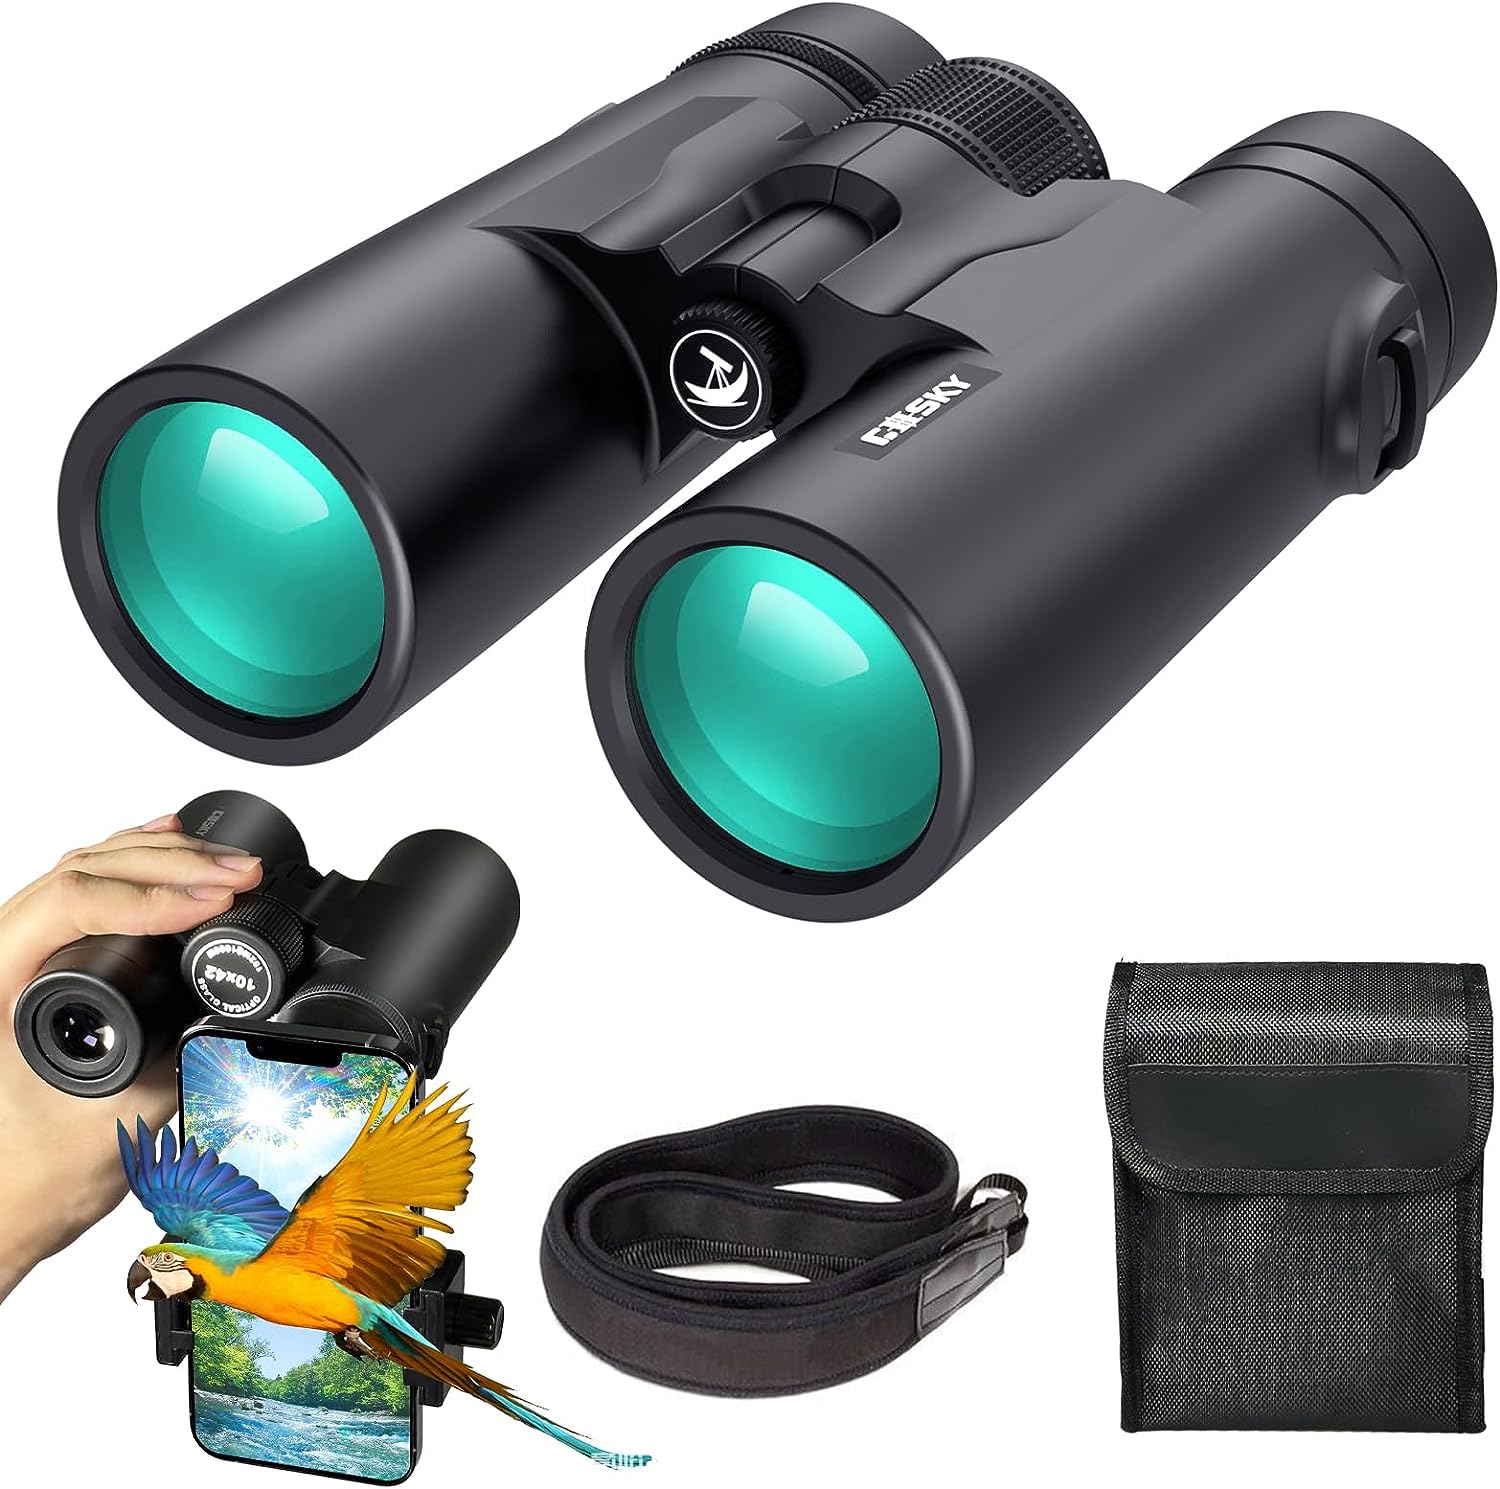 2. Gosky 10x42 Roof Prism Binoculars